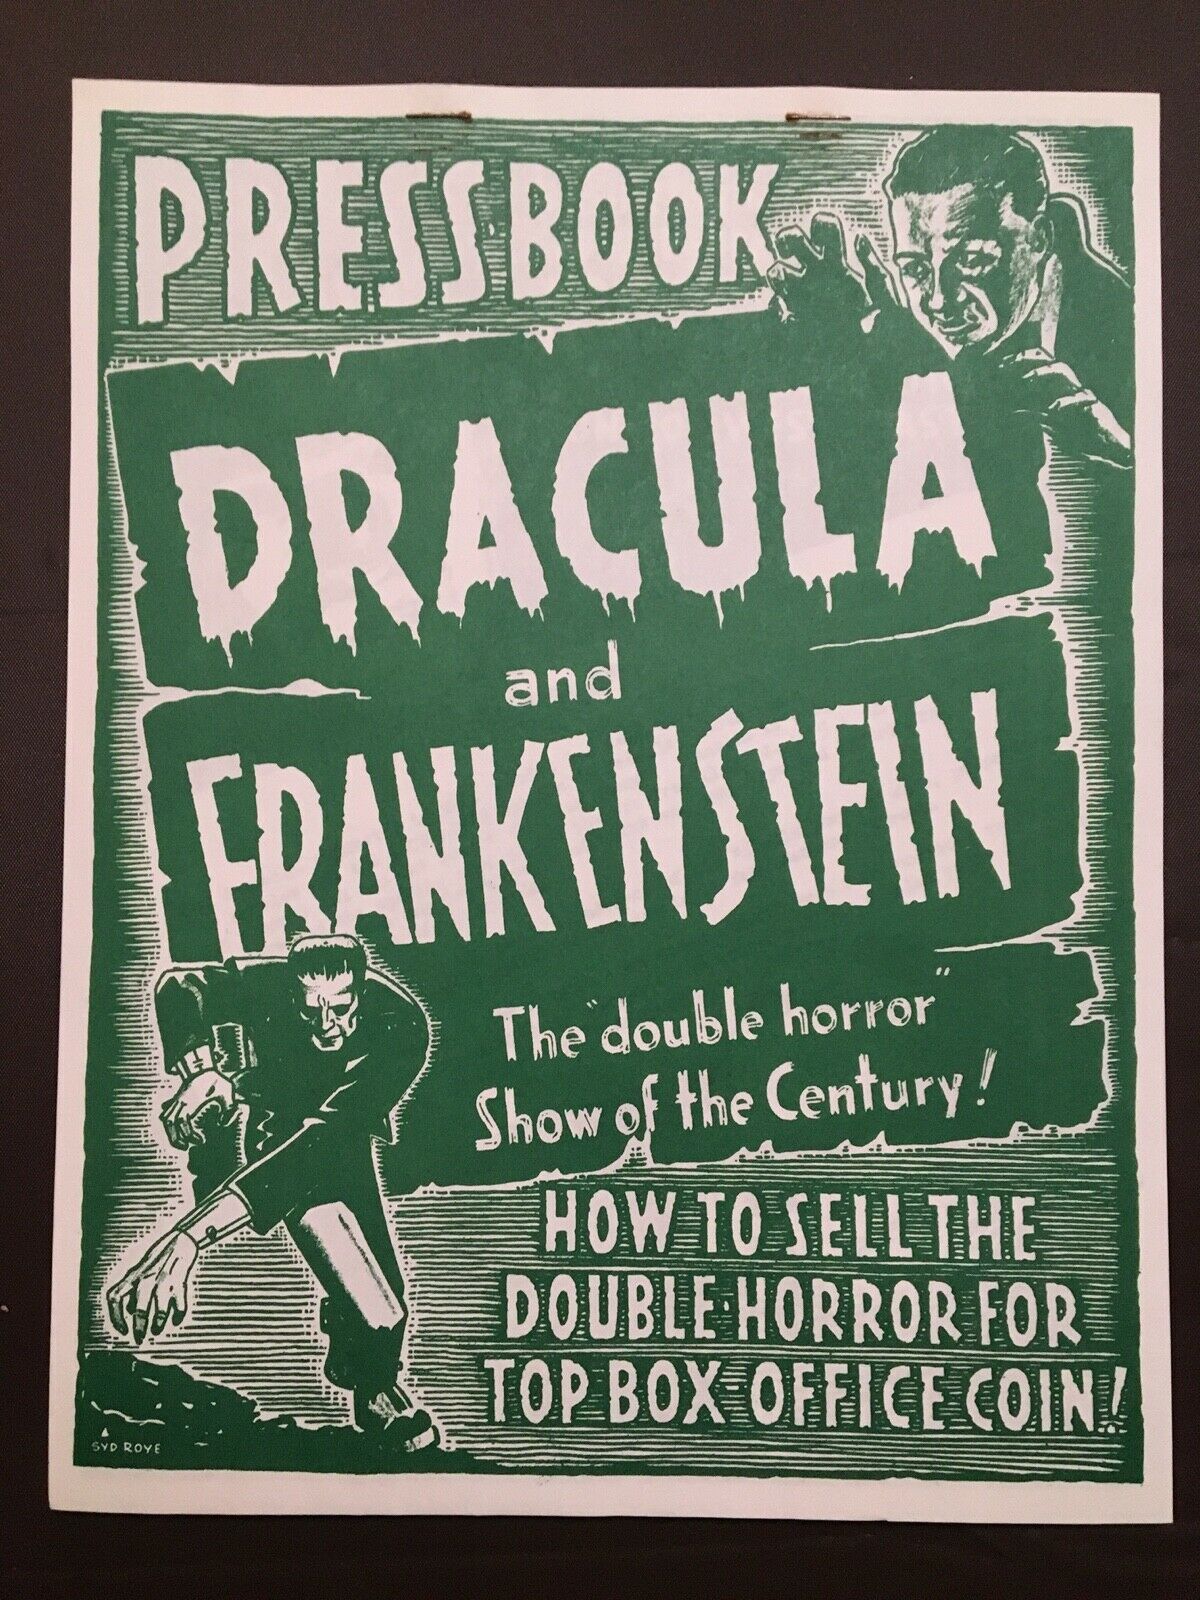 Original Dracula And Frankenstein 1950s Pressbooks Nos Warehouse Find!  Cooool!